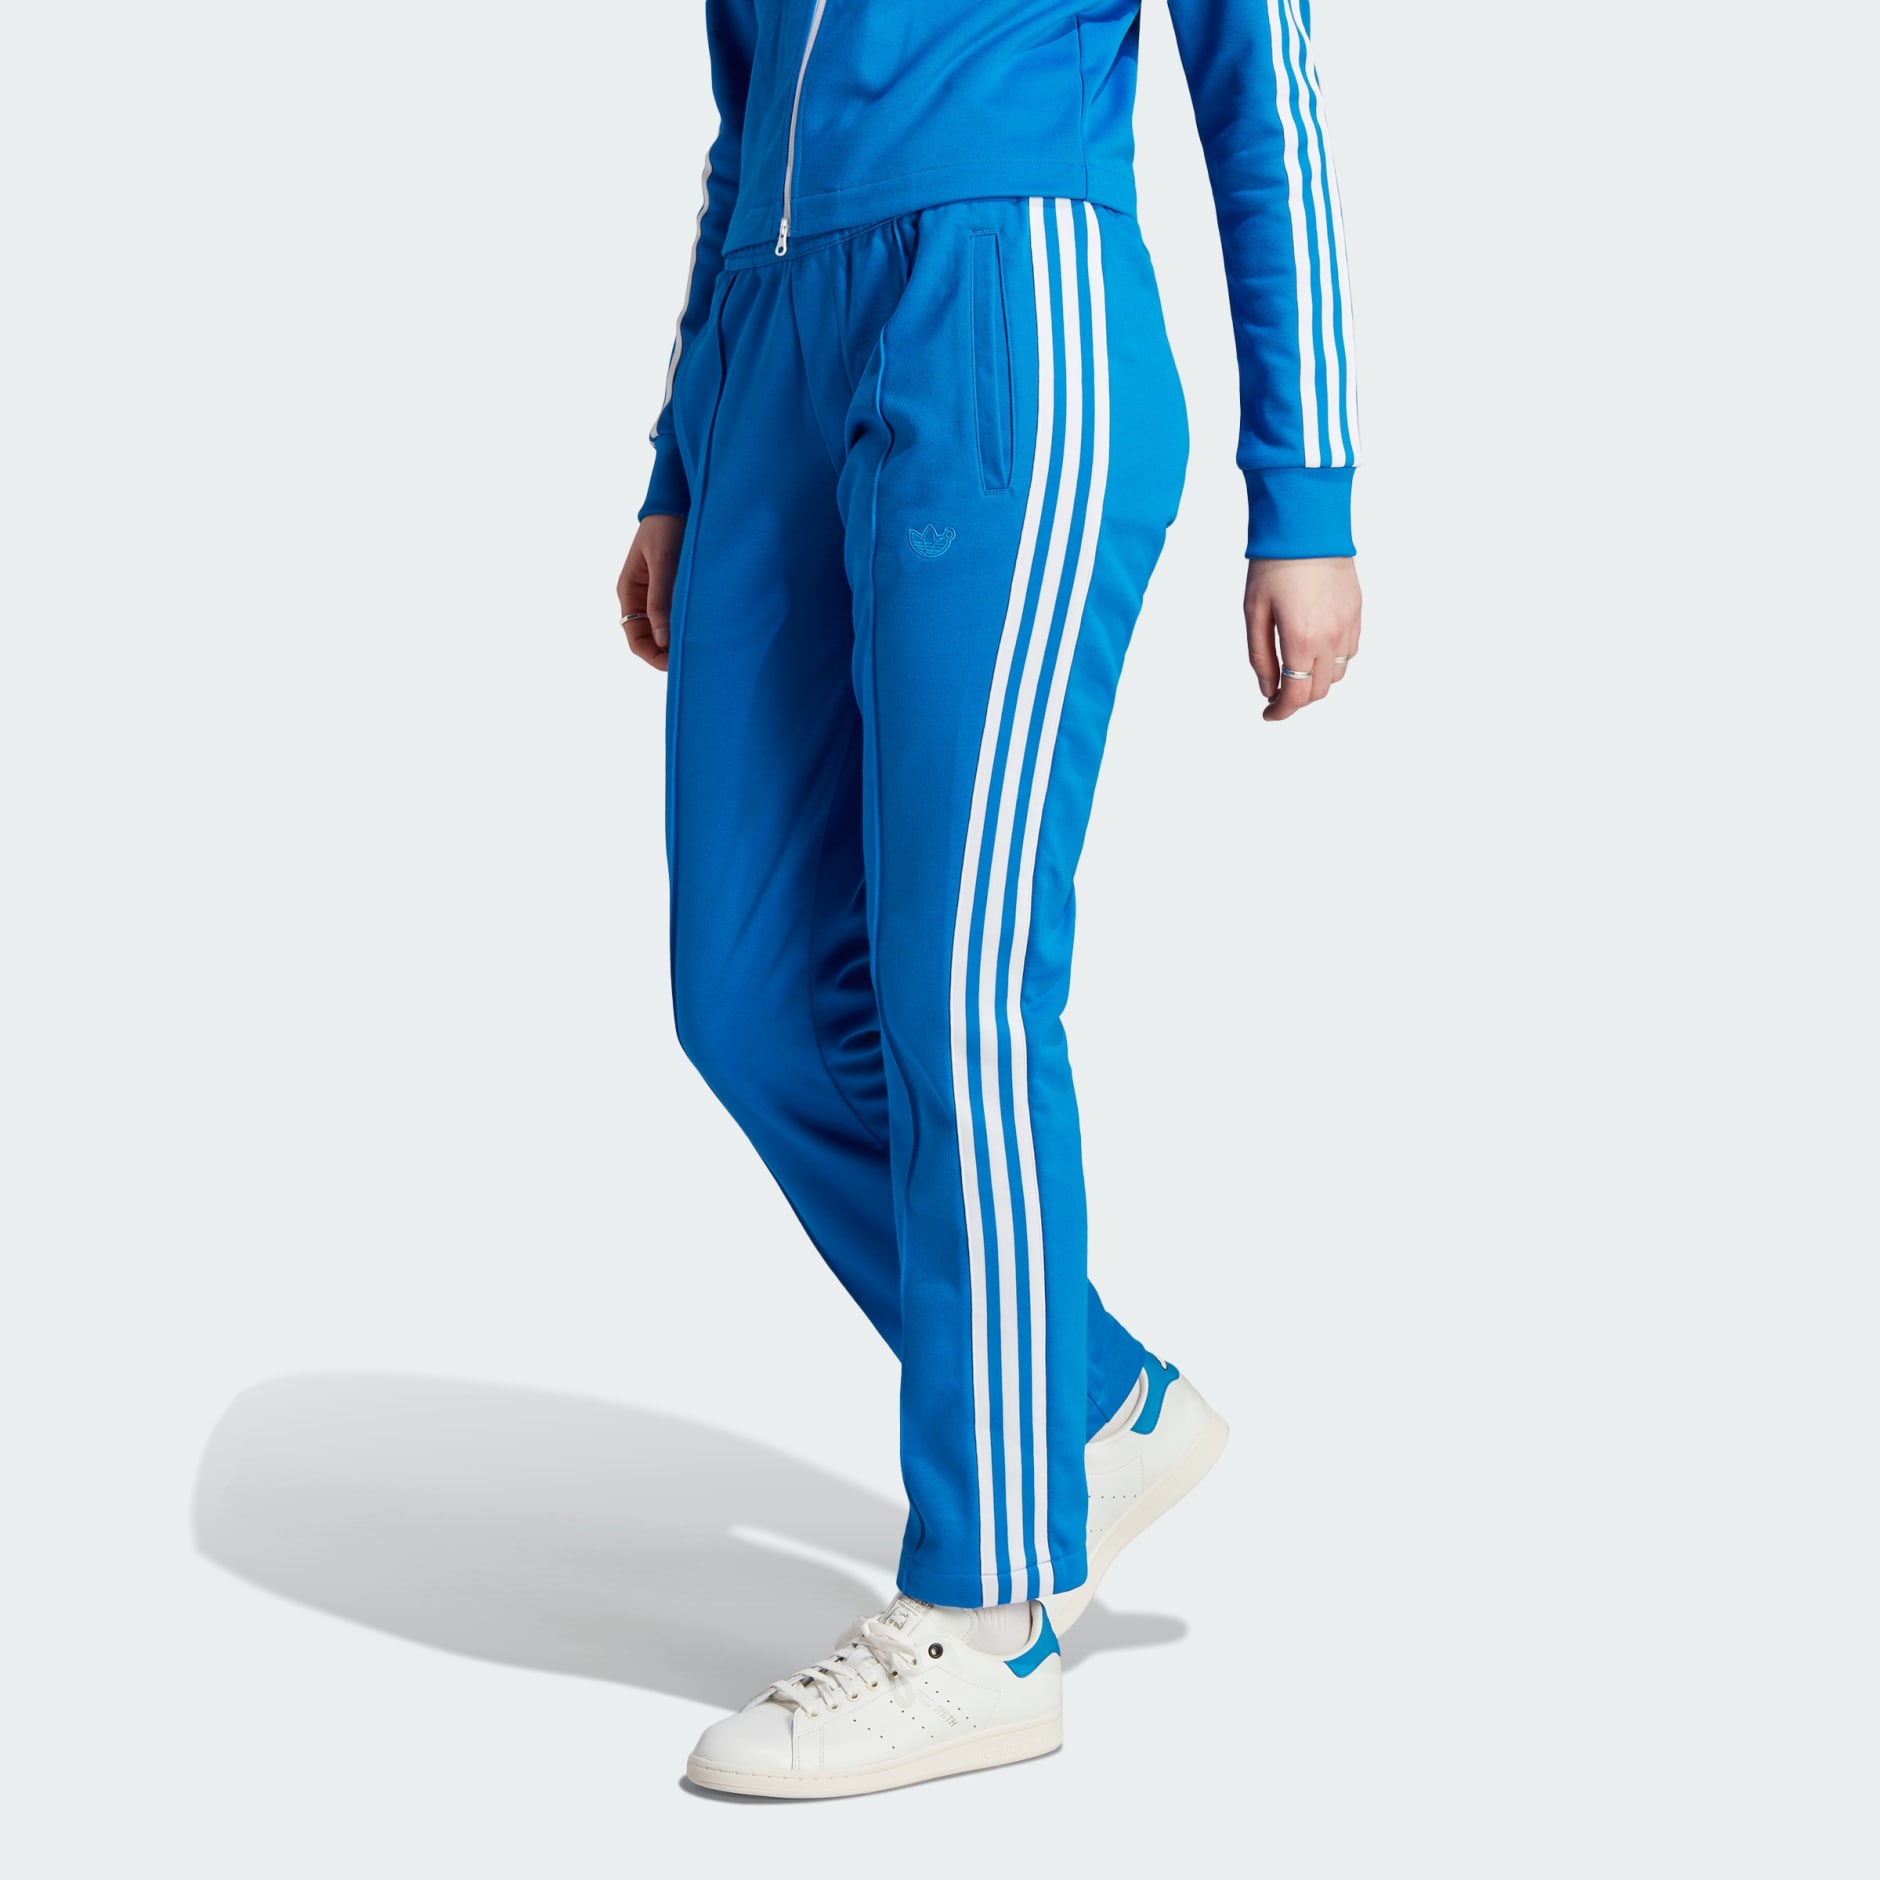  Adidas Blue Pants